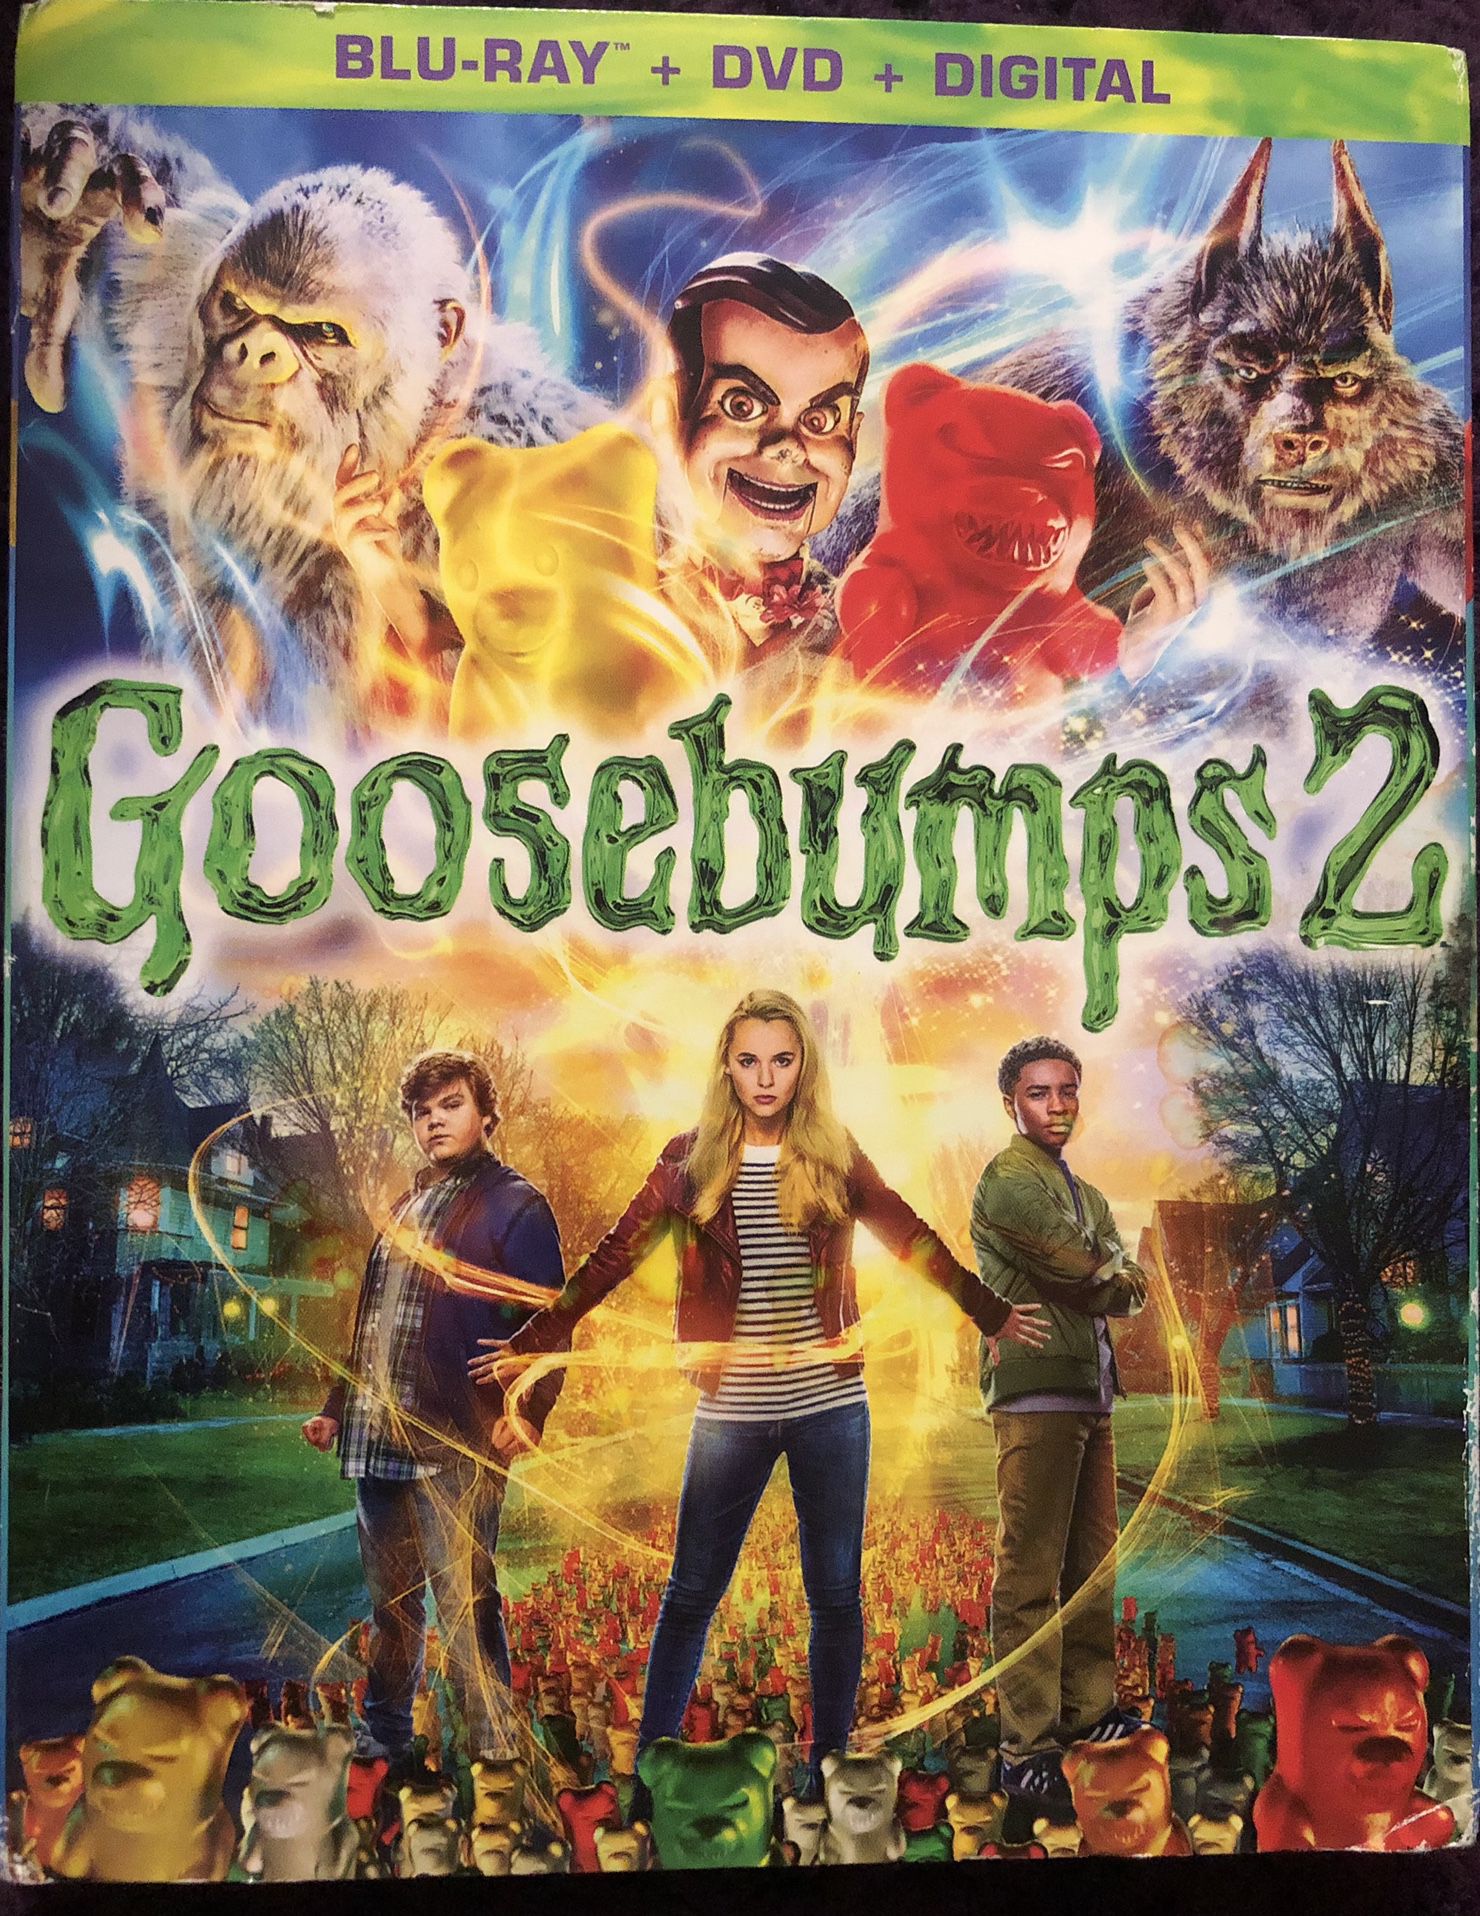 Goosebumps 2 Blu Ray, DVD, & Digital Copy